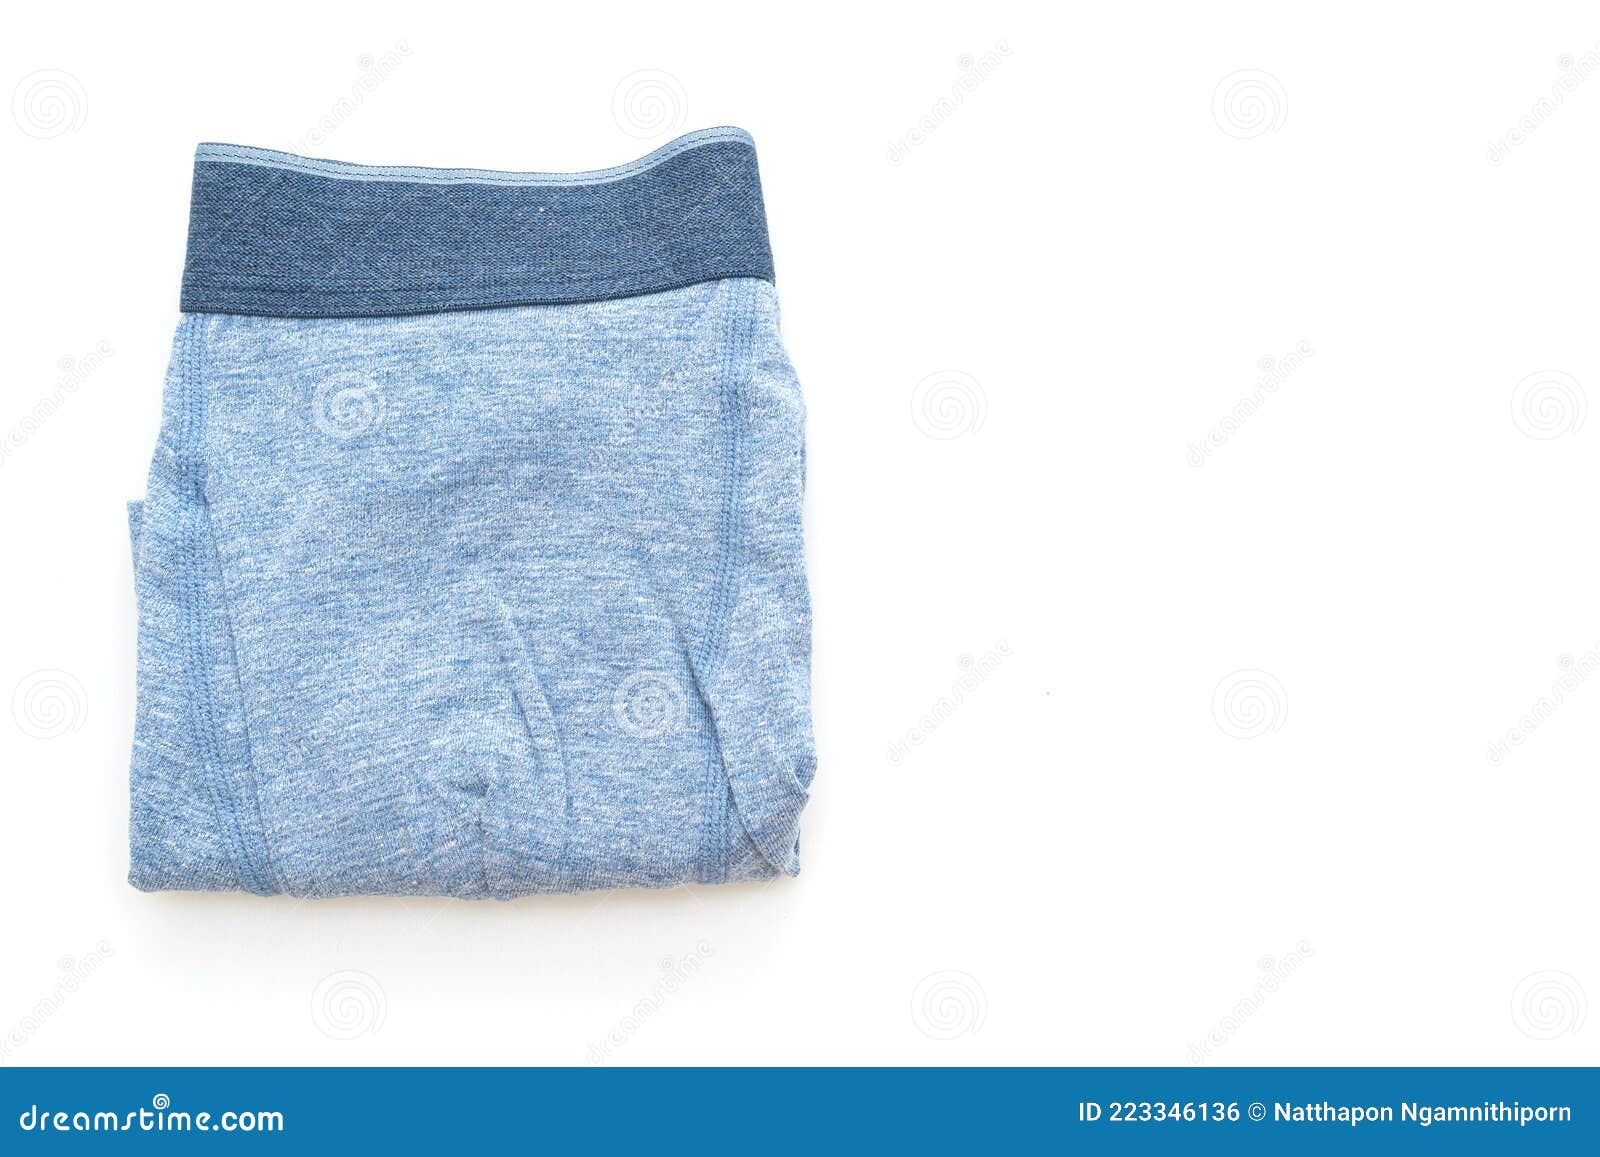 Blue Men Underwear on White Background Stock Photo - Image of ...